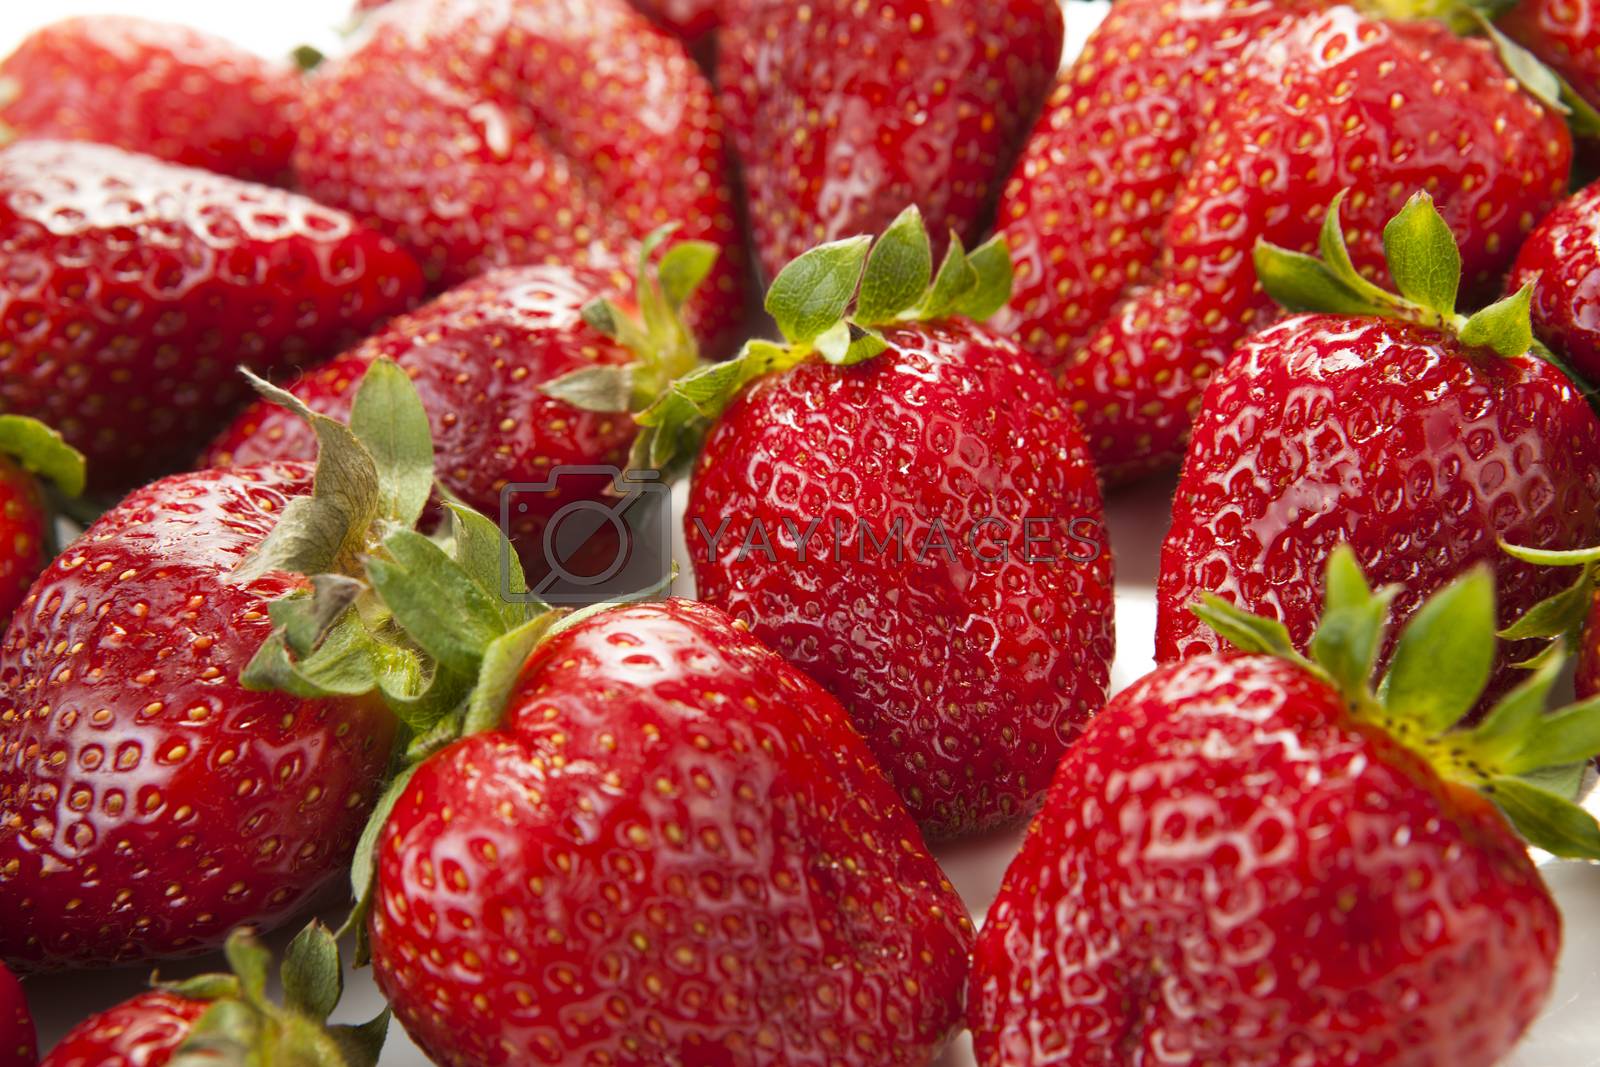 Royalty free image of handful of strawberries  by mizar_21984